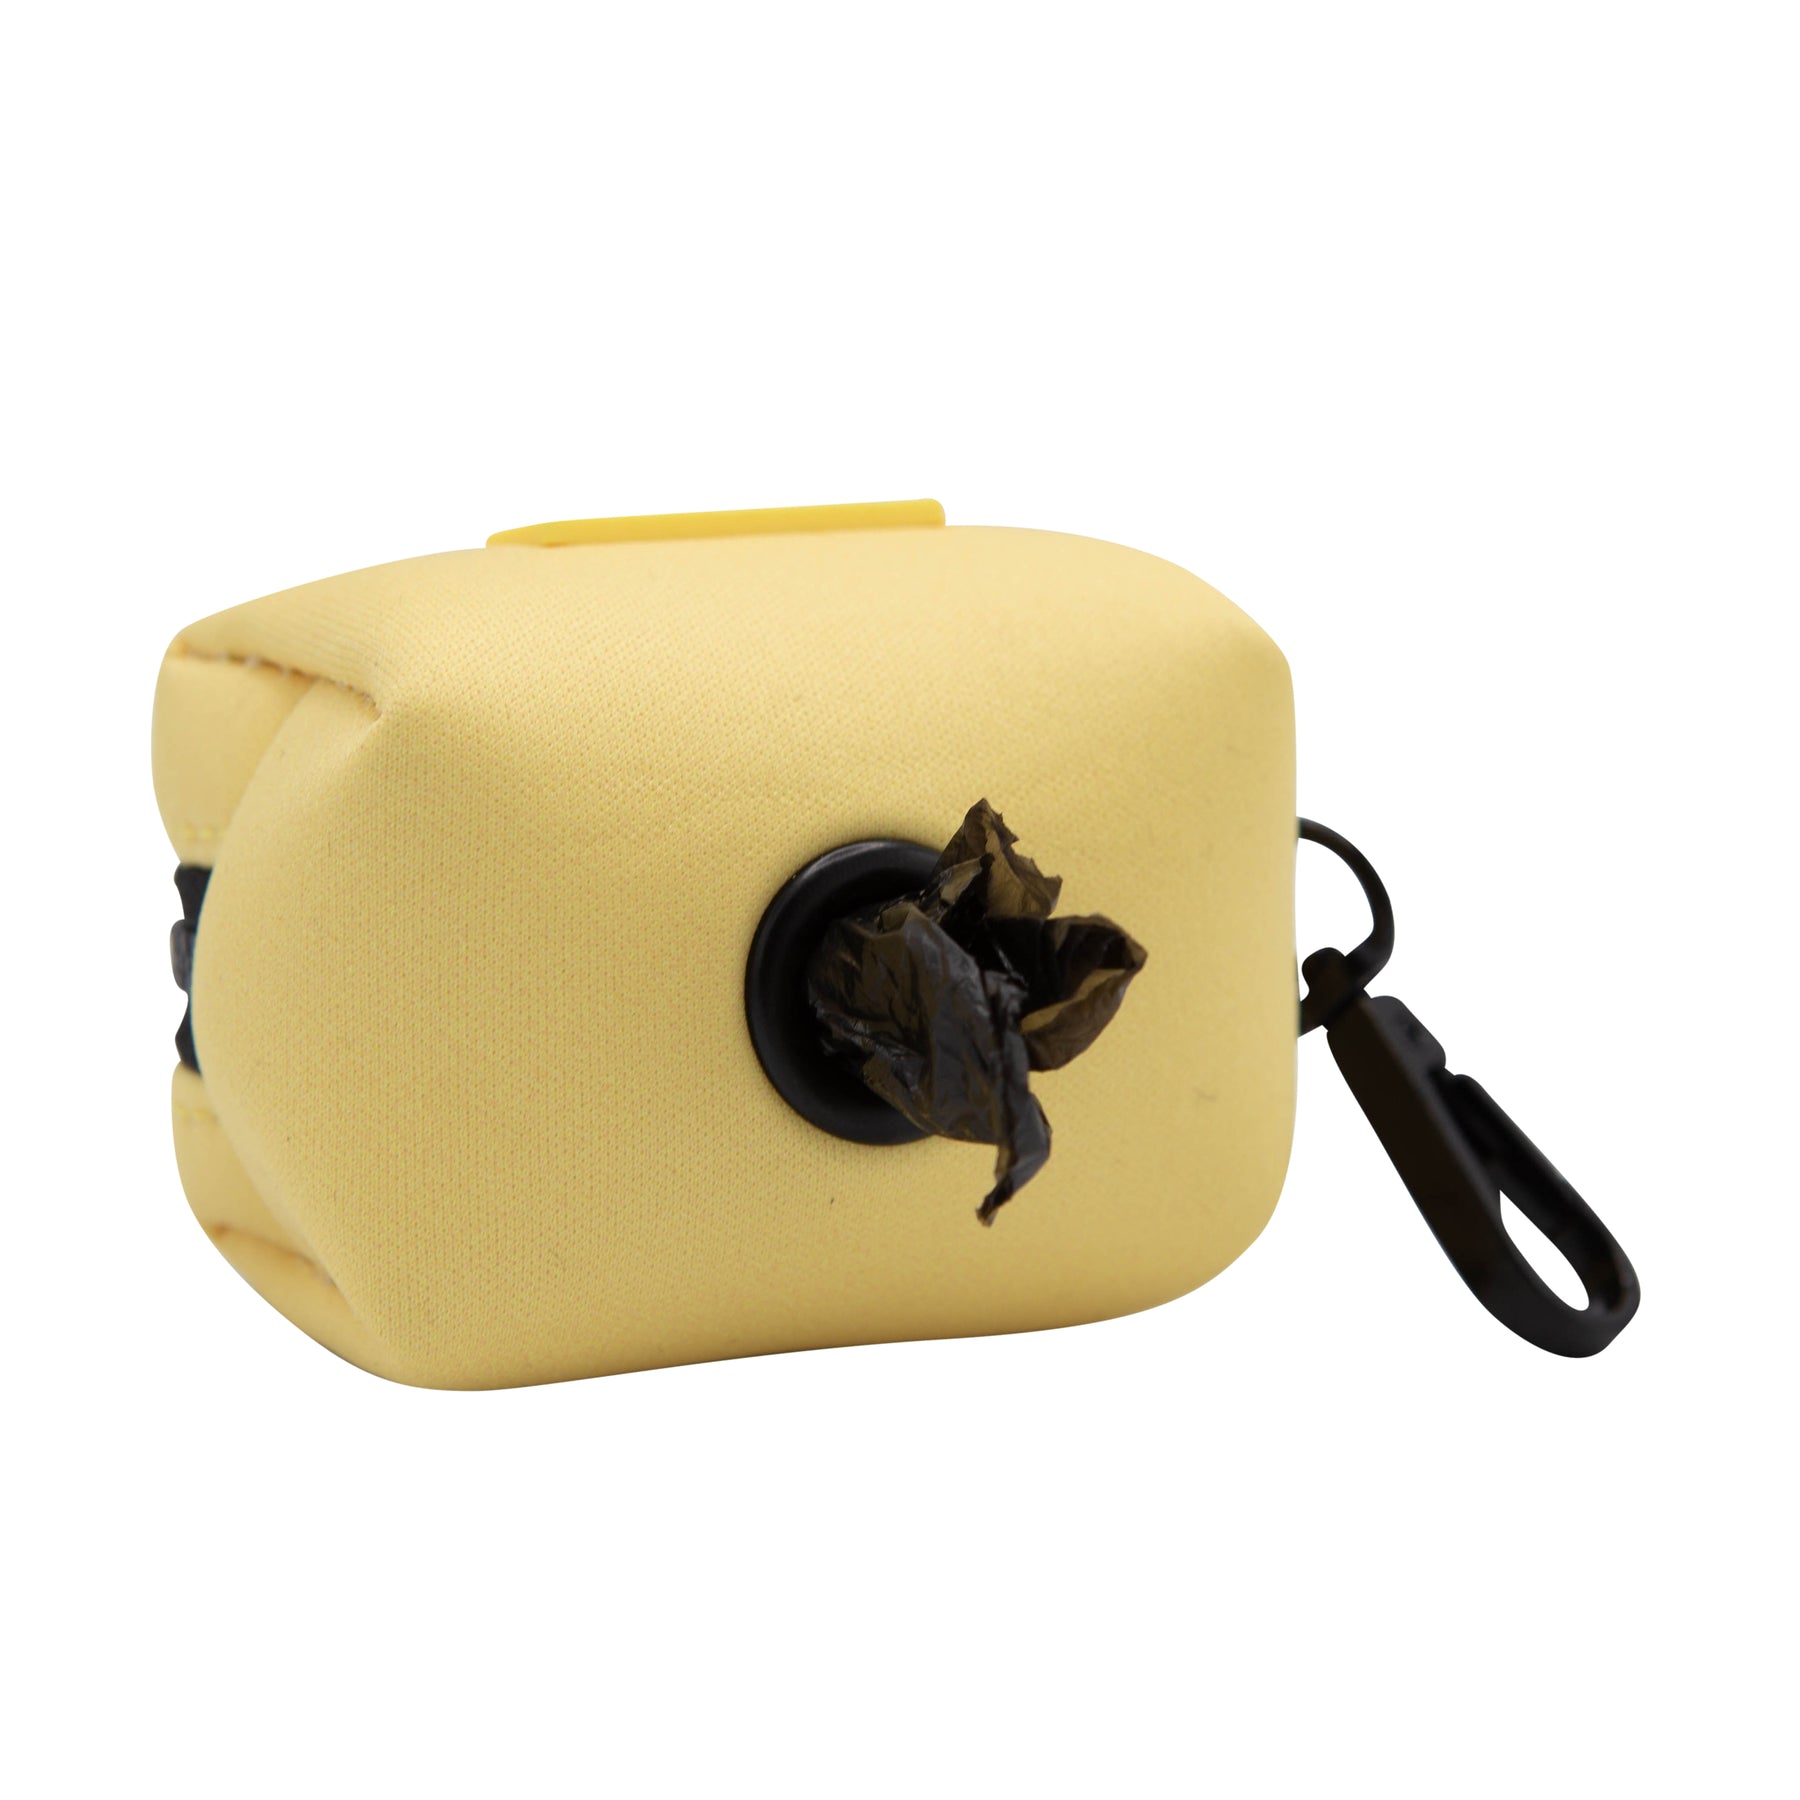 Dog Waste Bag Holder - Adventure Yellow